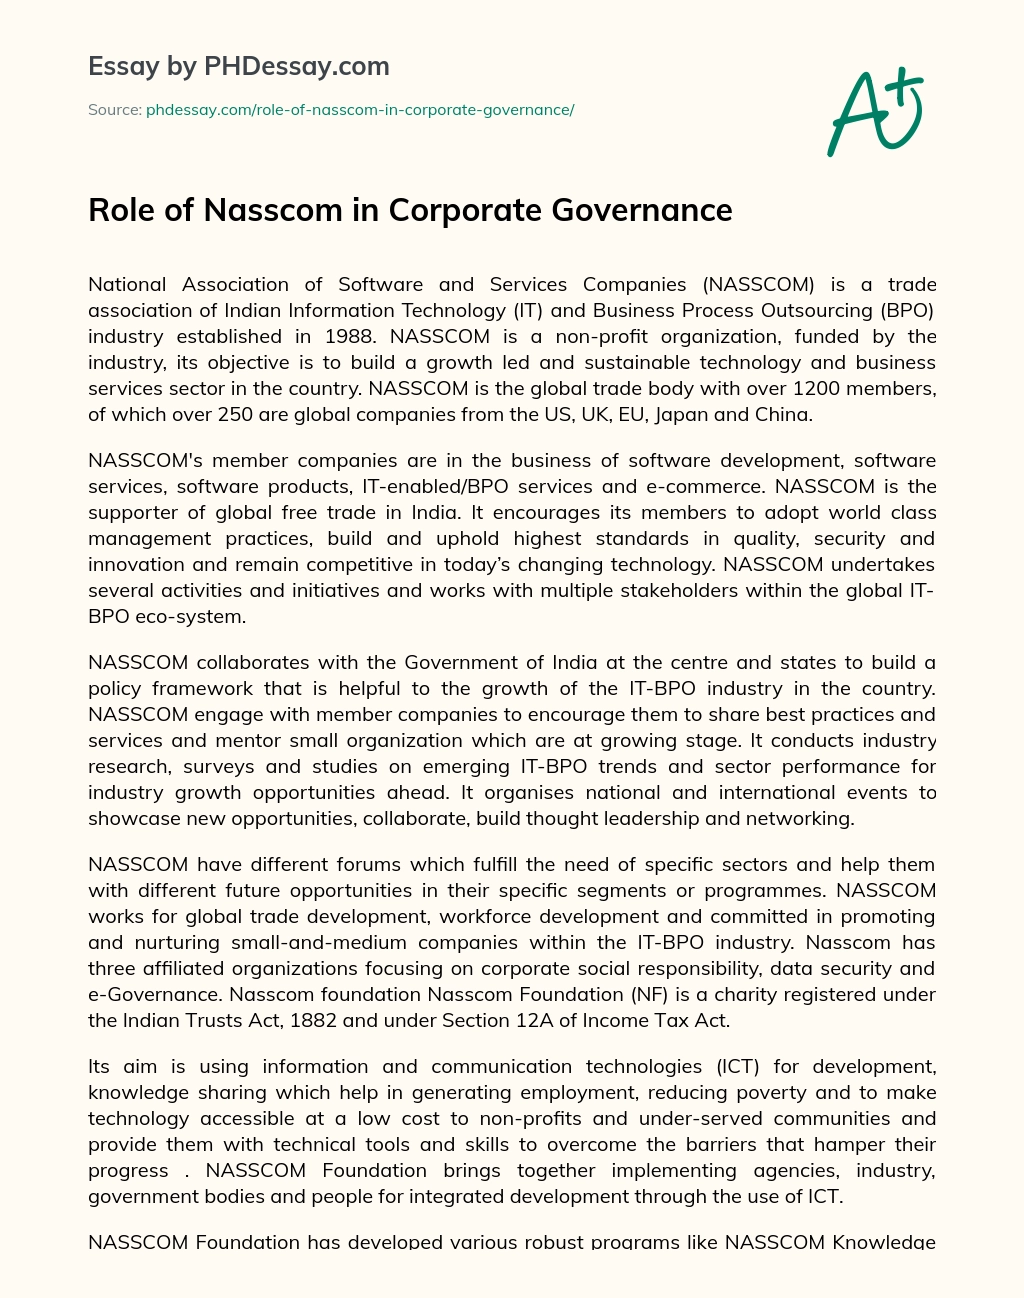 Role of Nasscom in Corporate Governance essay